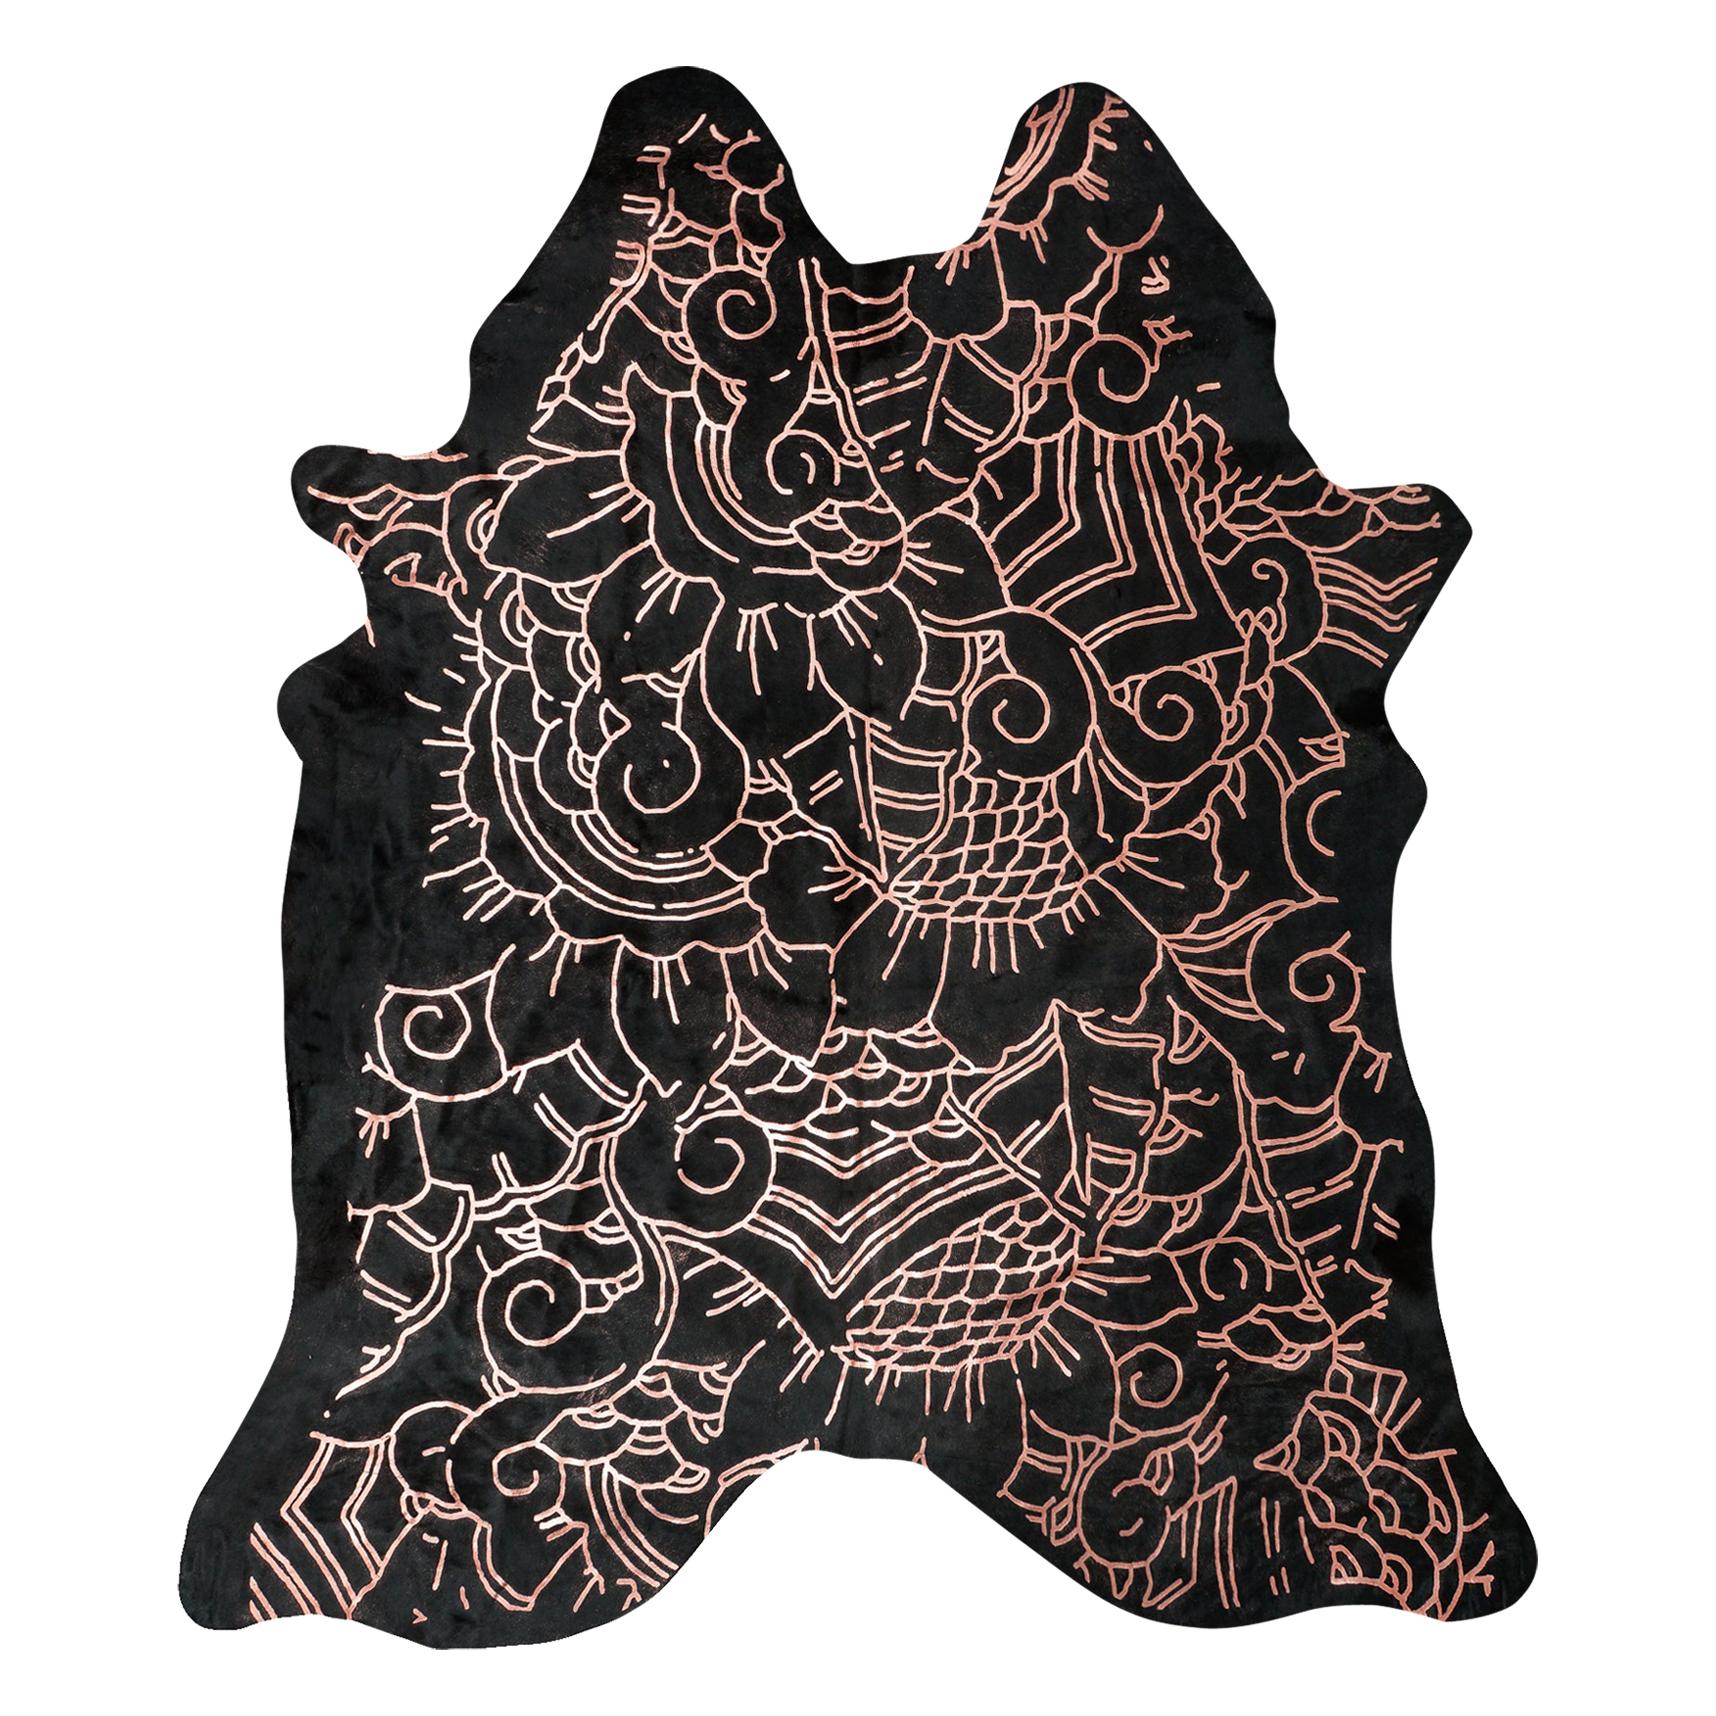 Copper Metallic Boho Batik Pattern Black Cowhide Rug, Large